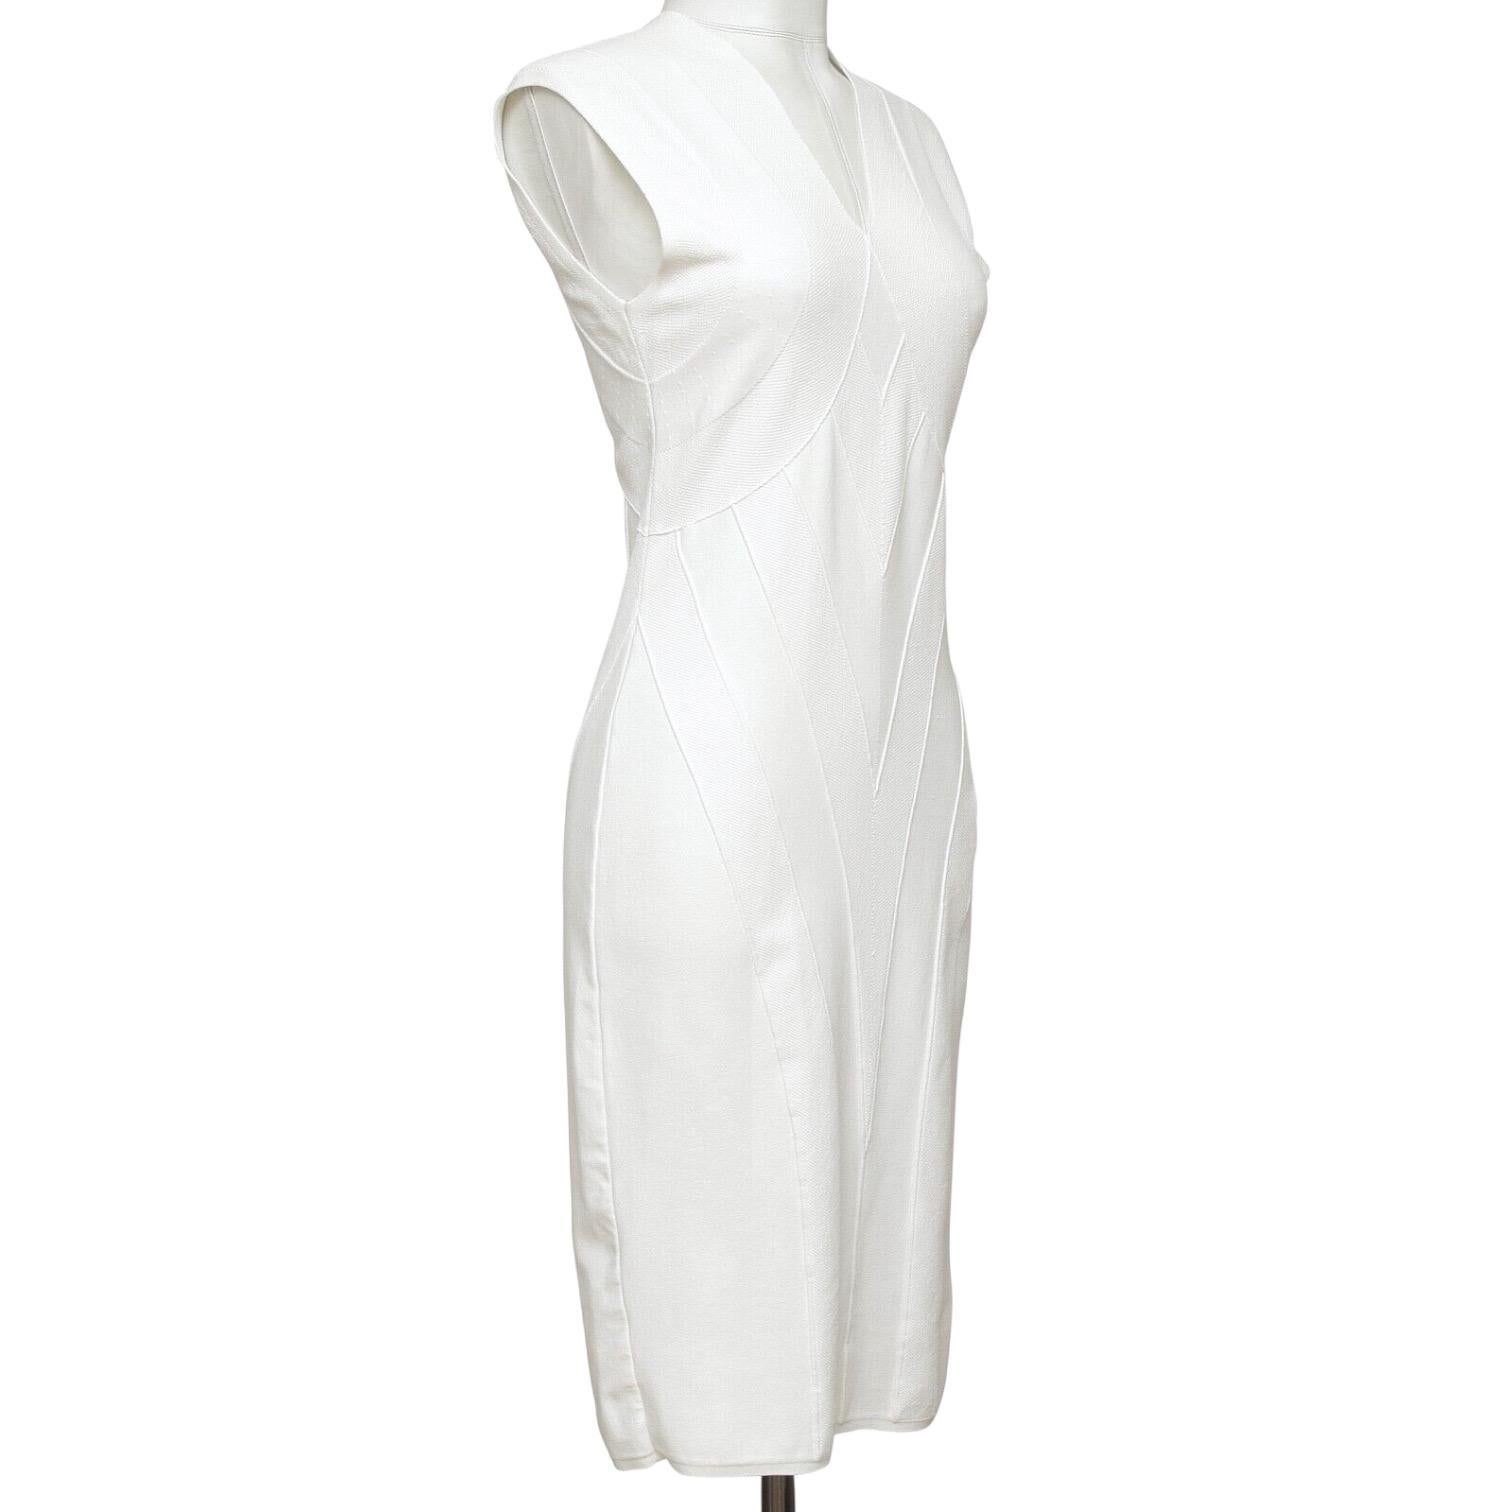 GUARANTEED AUTHENTIC FENDI WHITE VISCOSE KNIT SLEEVELESS DRESS

Design:
- White viscose knit patterned sleeveless dress.
- V-neck.
- Sleeveless.
- Slip-on.

Material: 83% Viscose, 17% Polyester

Size: 40

Measurements (Approximate Laid Flat, Good